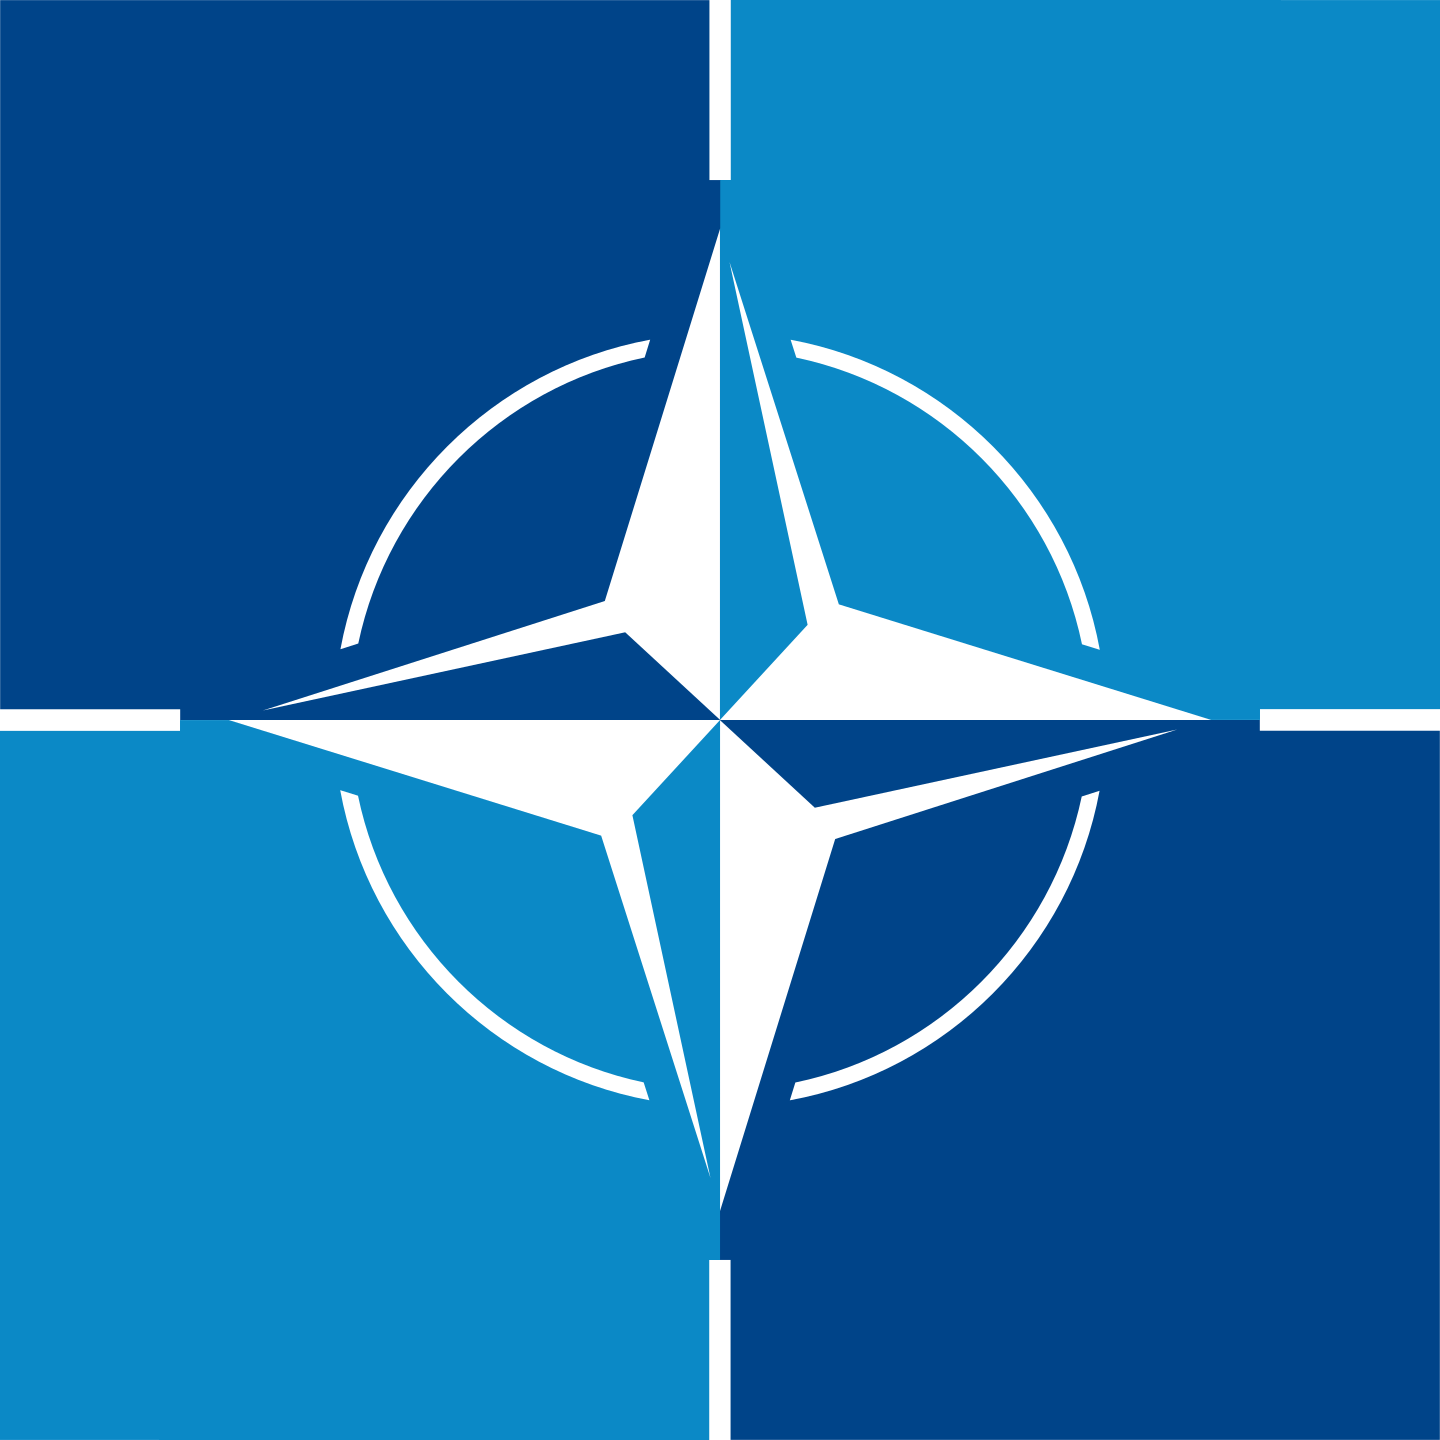 nato otan logo 6 - Nato Logo - Otan Logo